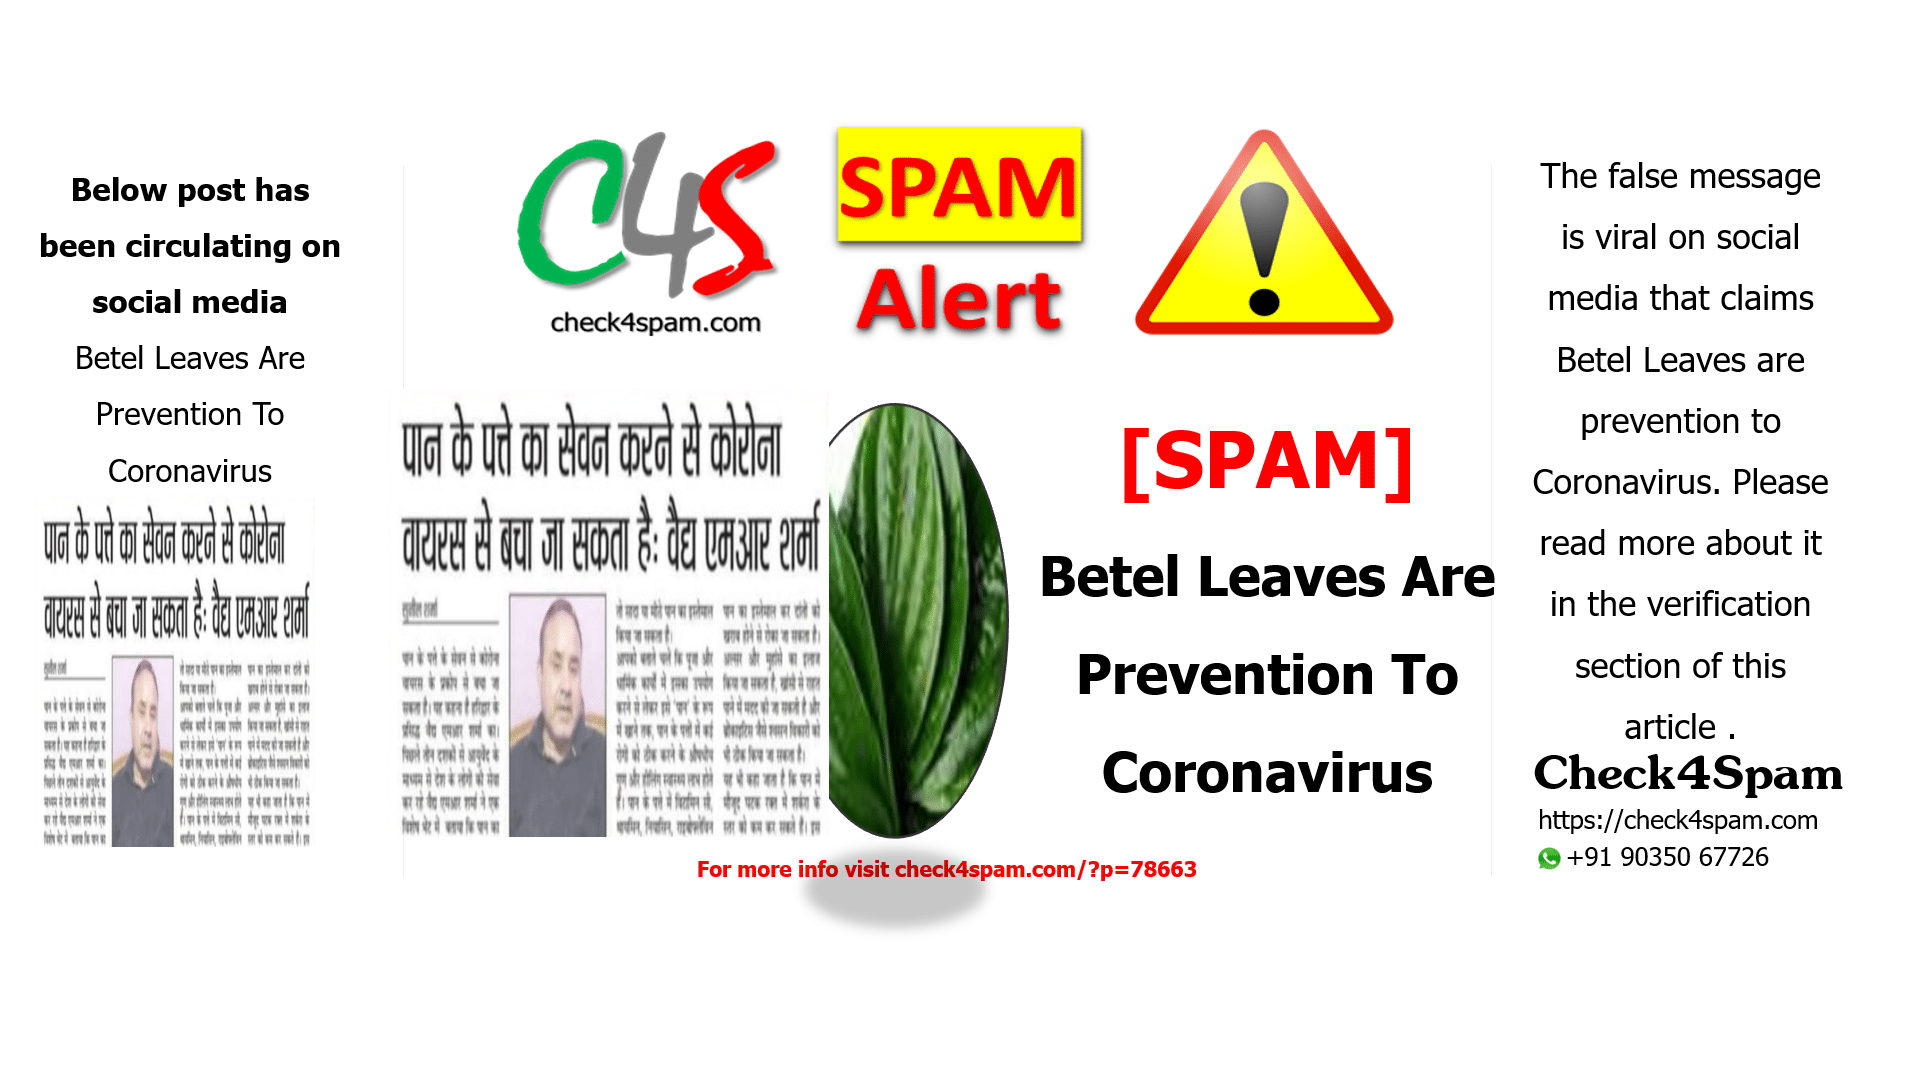 Betel Leaves Are Prevention To Coronavirus